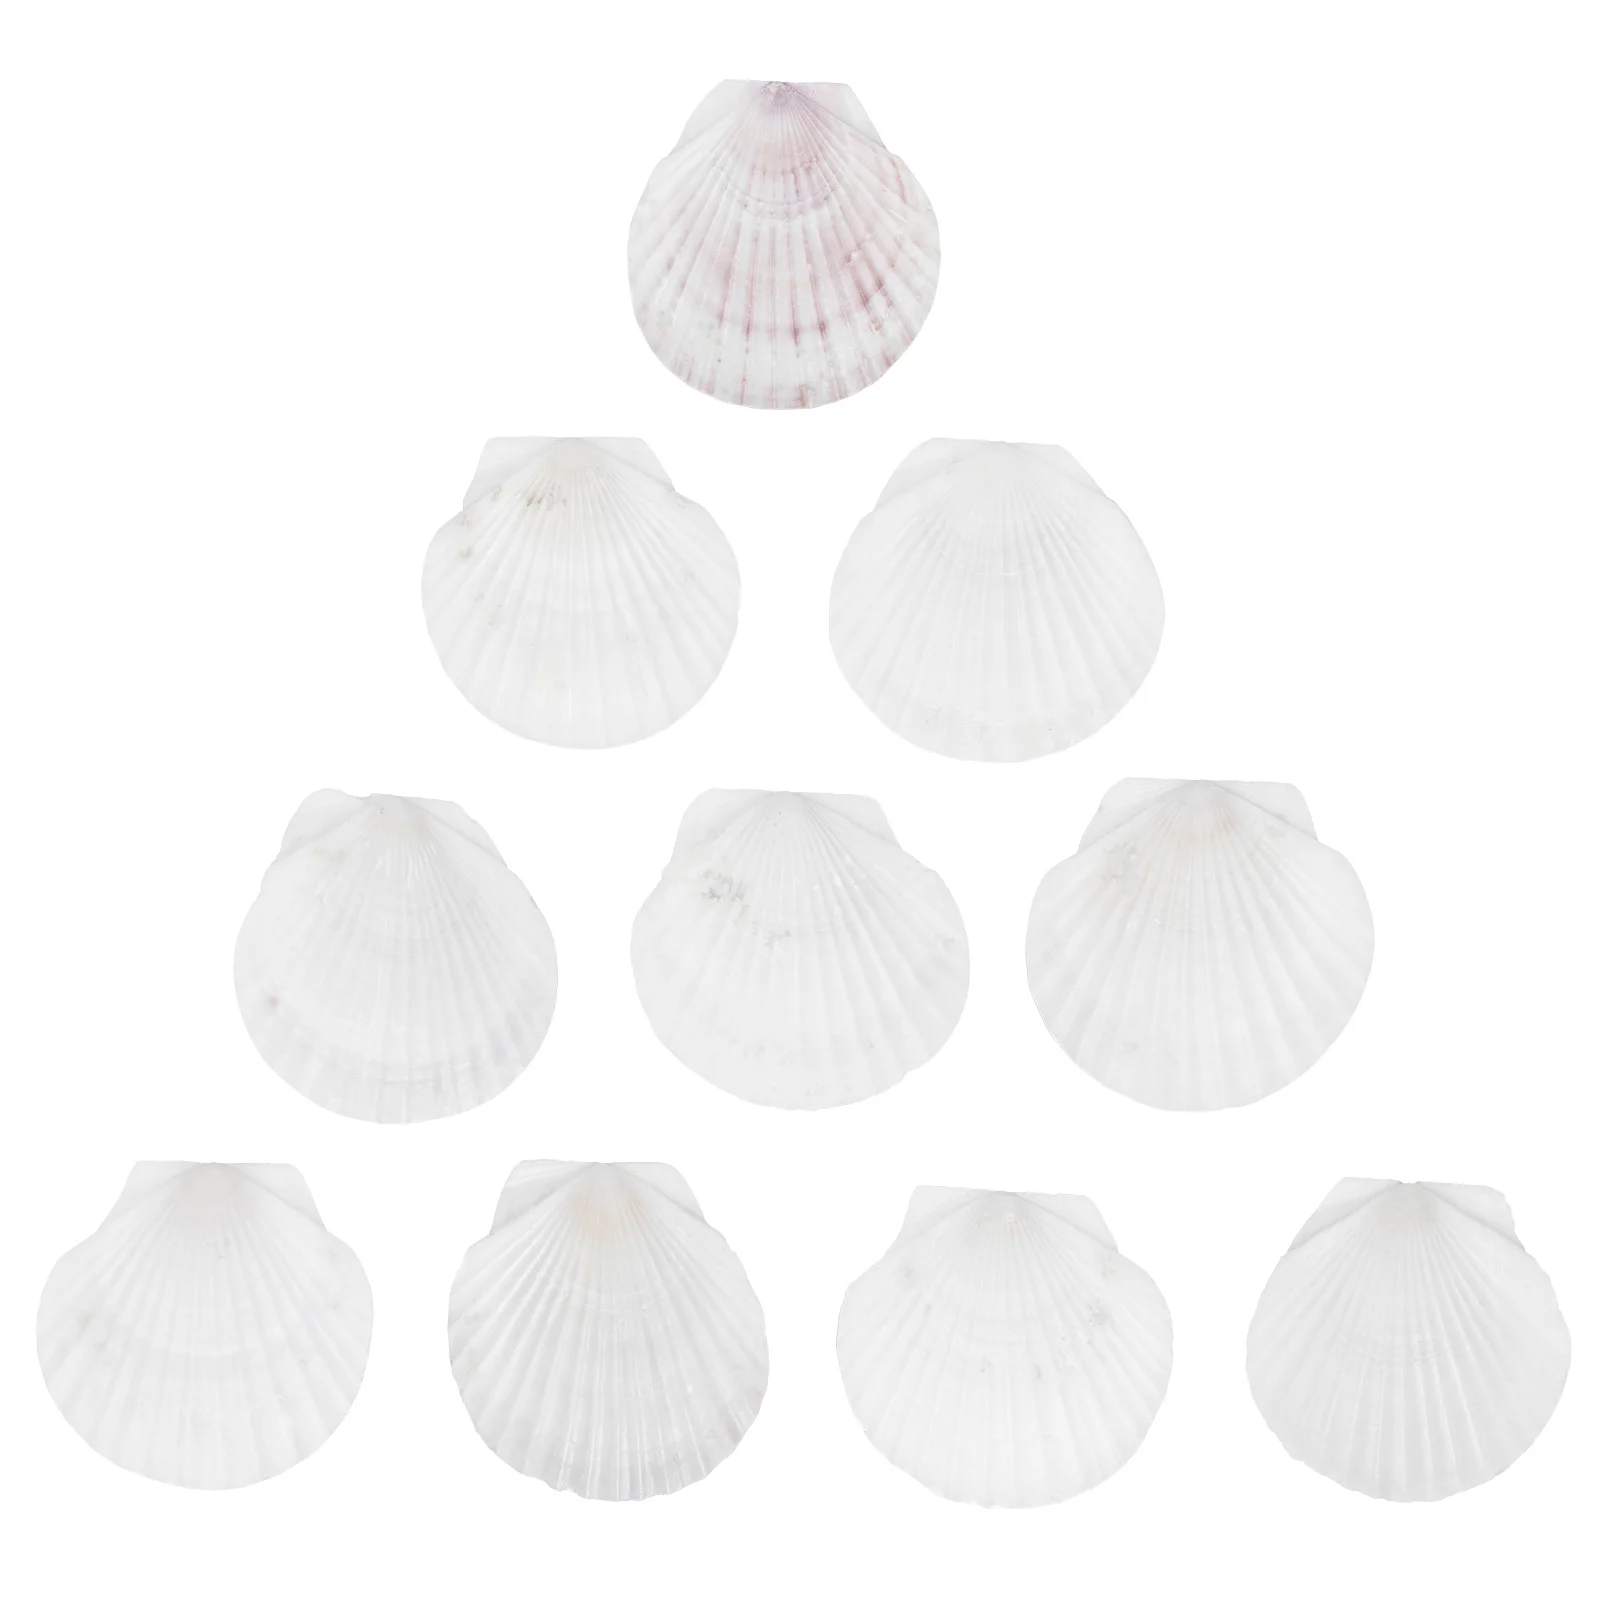 Shell Scallop Dish Shellsbeach Seacraft White Seashell Baking Birthday Mom Decor Natural Serving Jewelry Large Holder Plate